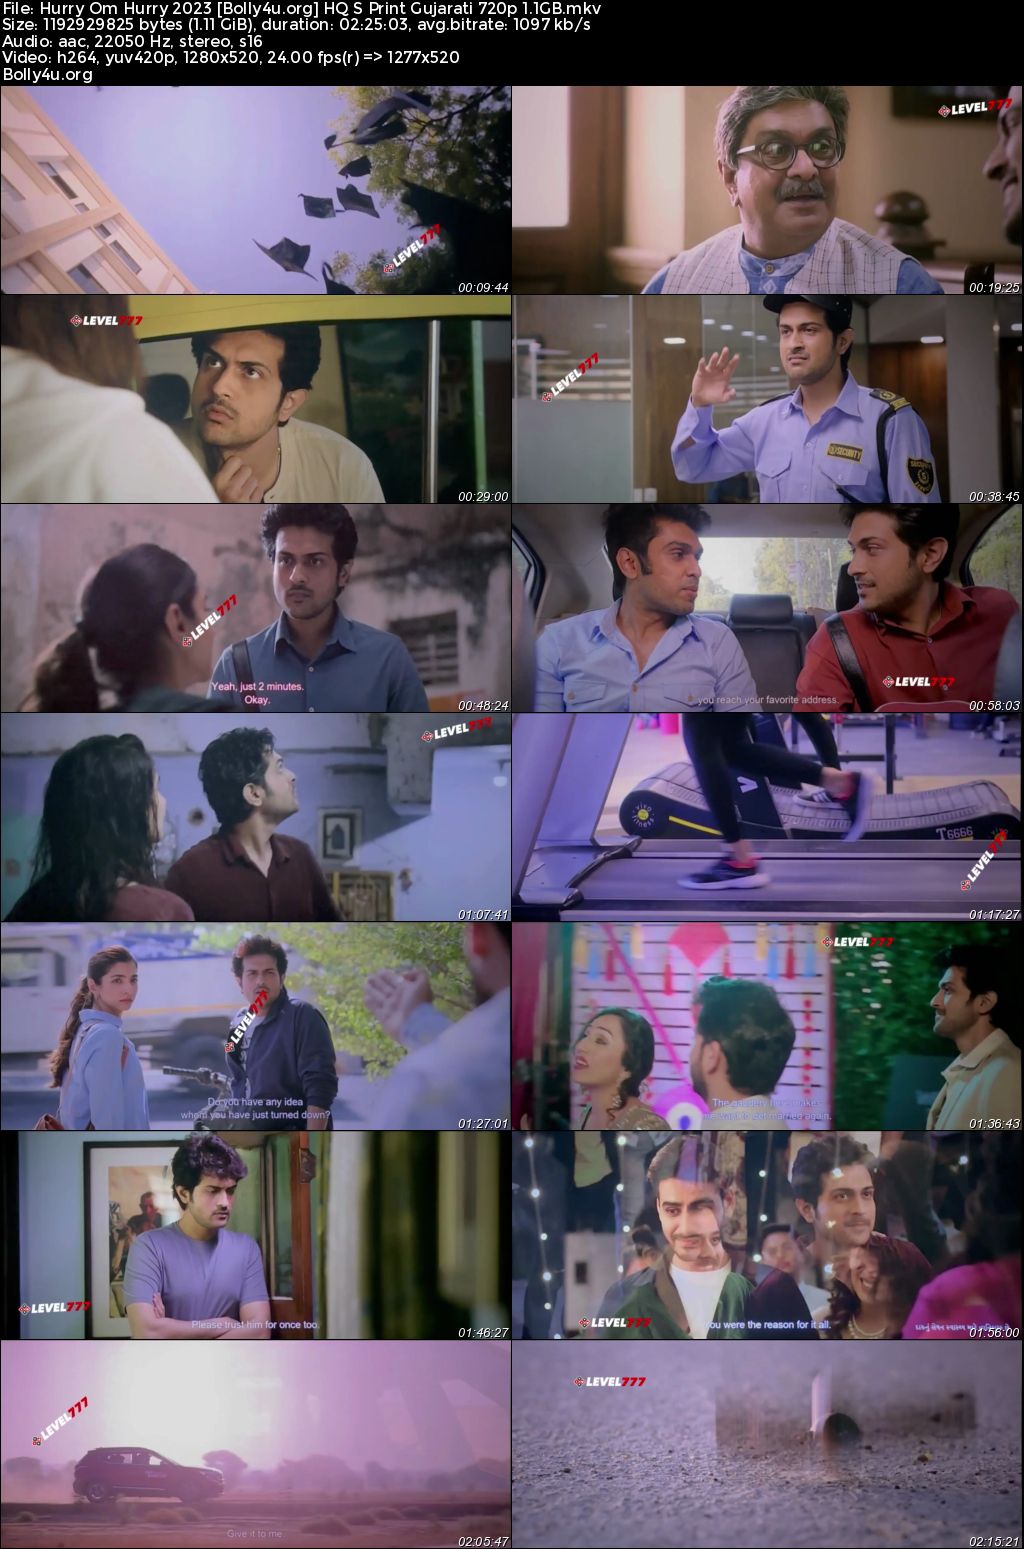 Hurry Om Hurry 2023 HQ S Print Gujarati Full Movie Download 720p 480p